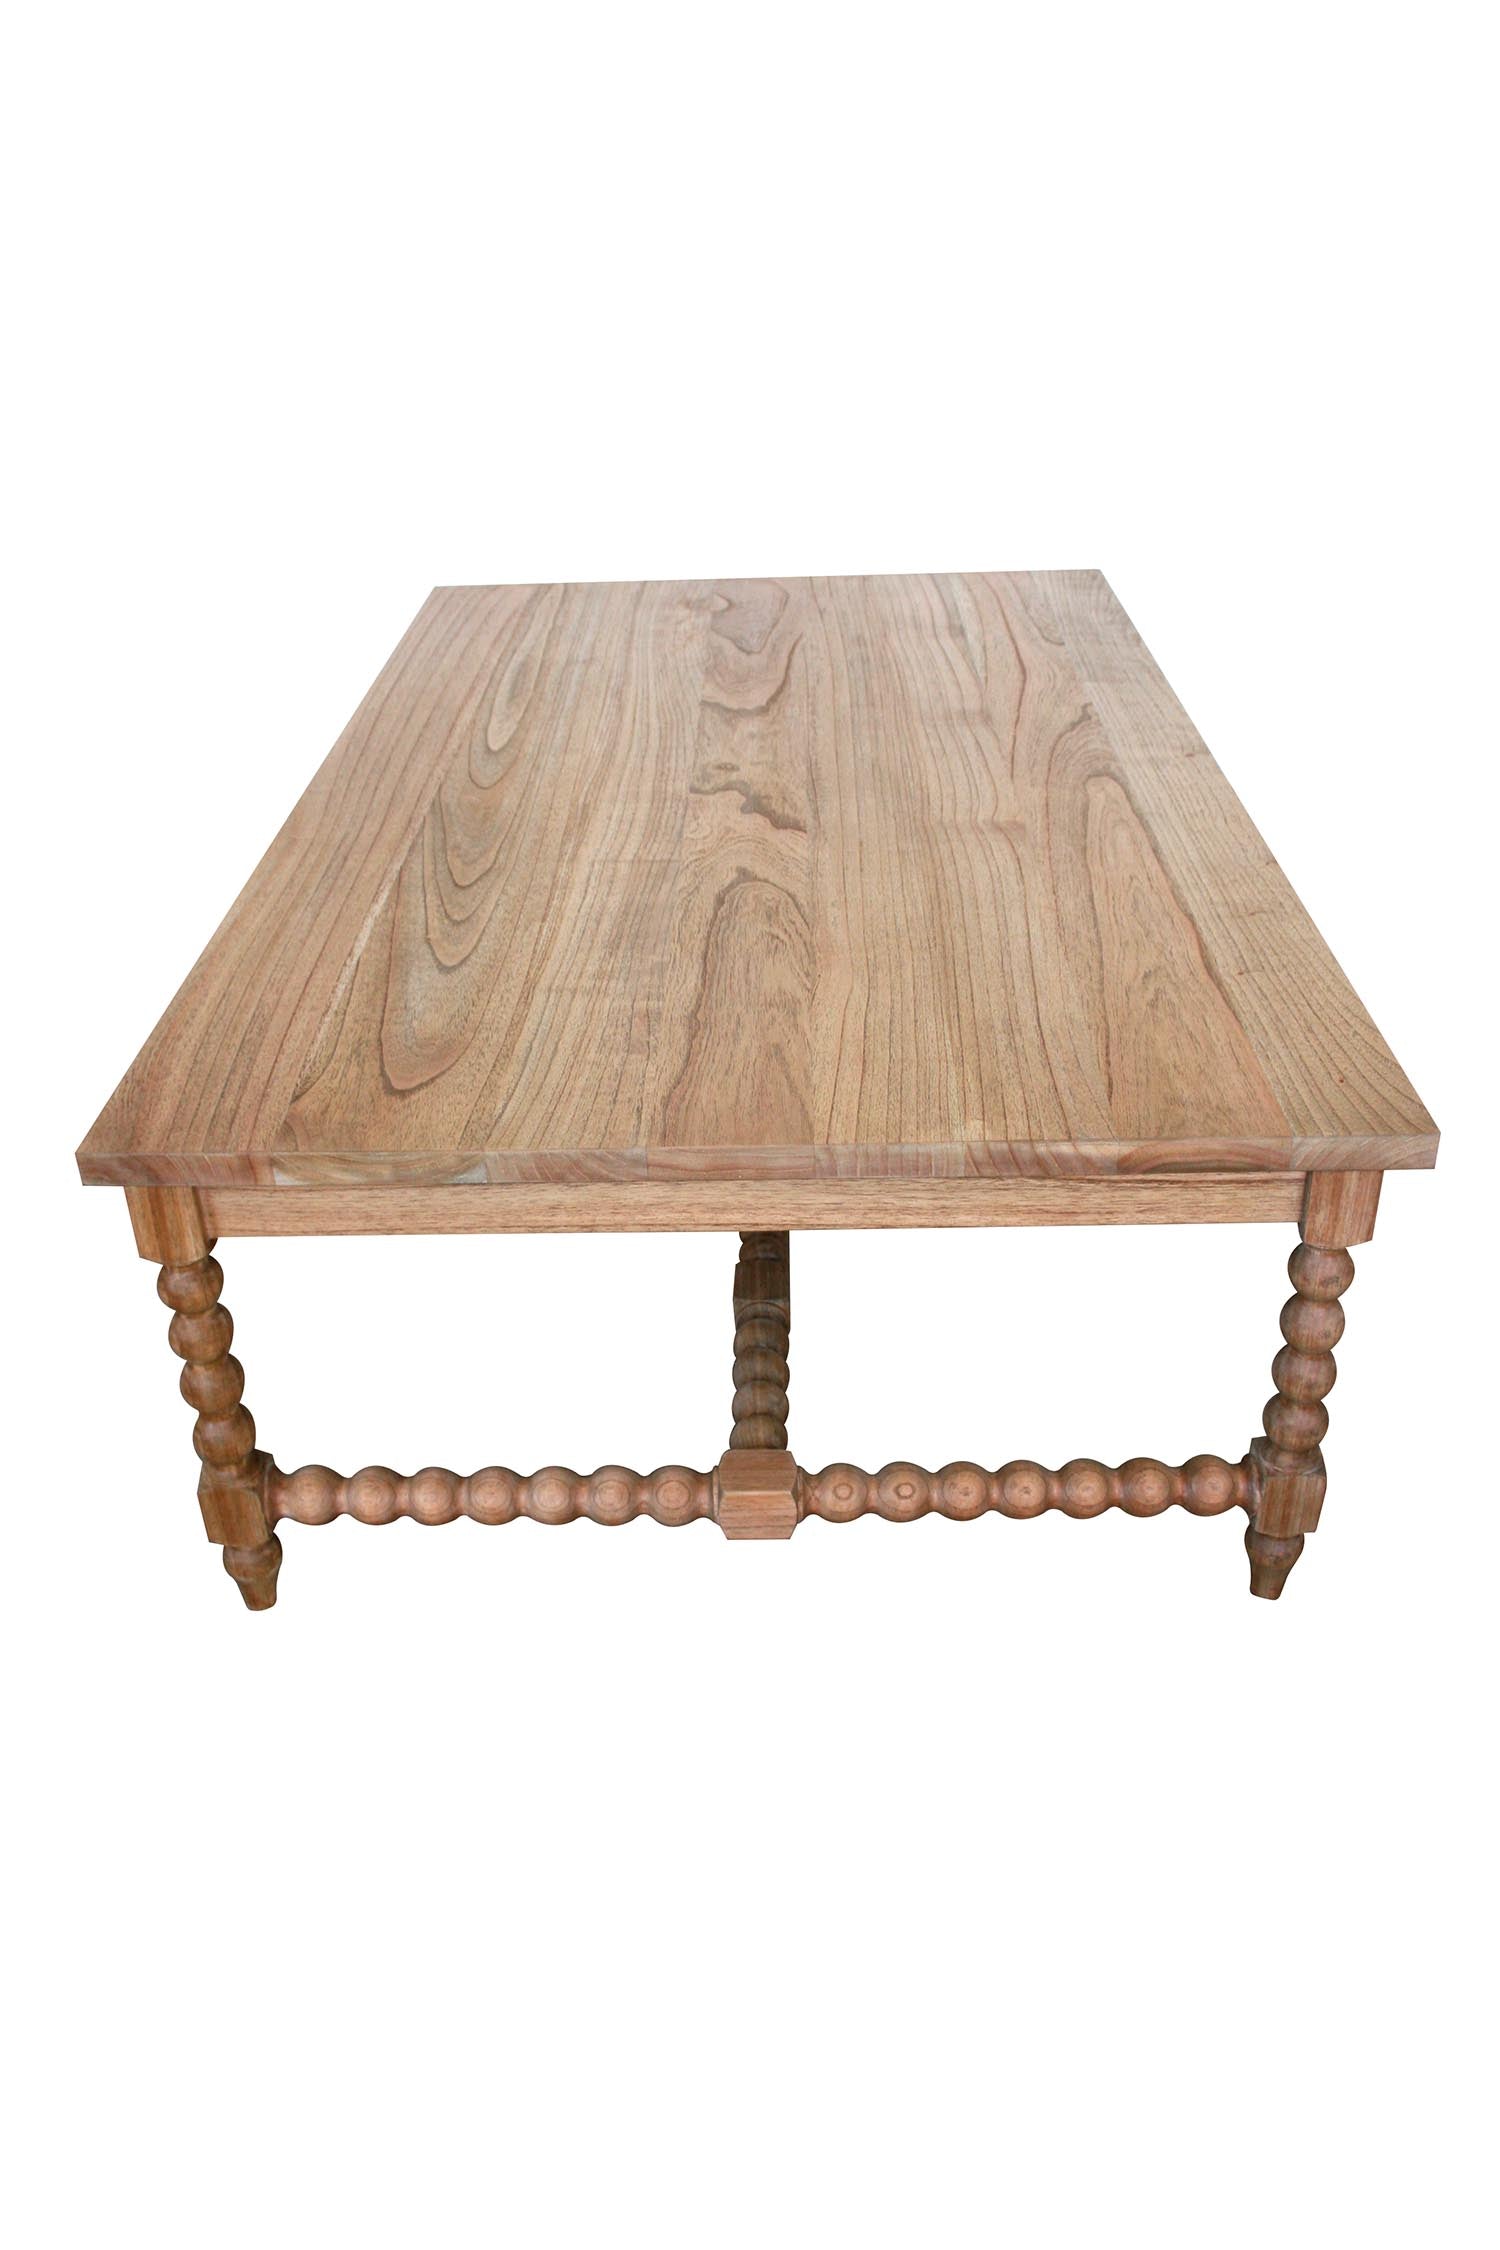 Morningside White Cedar Bobbin Coffee Table – Plain Top